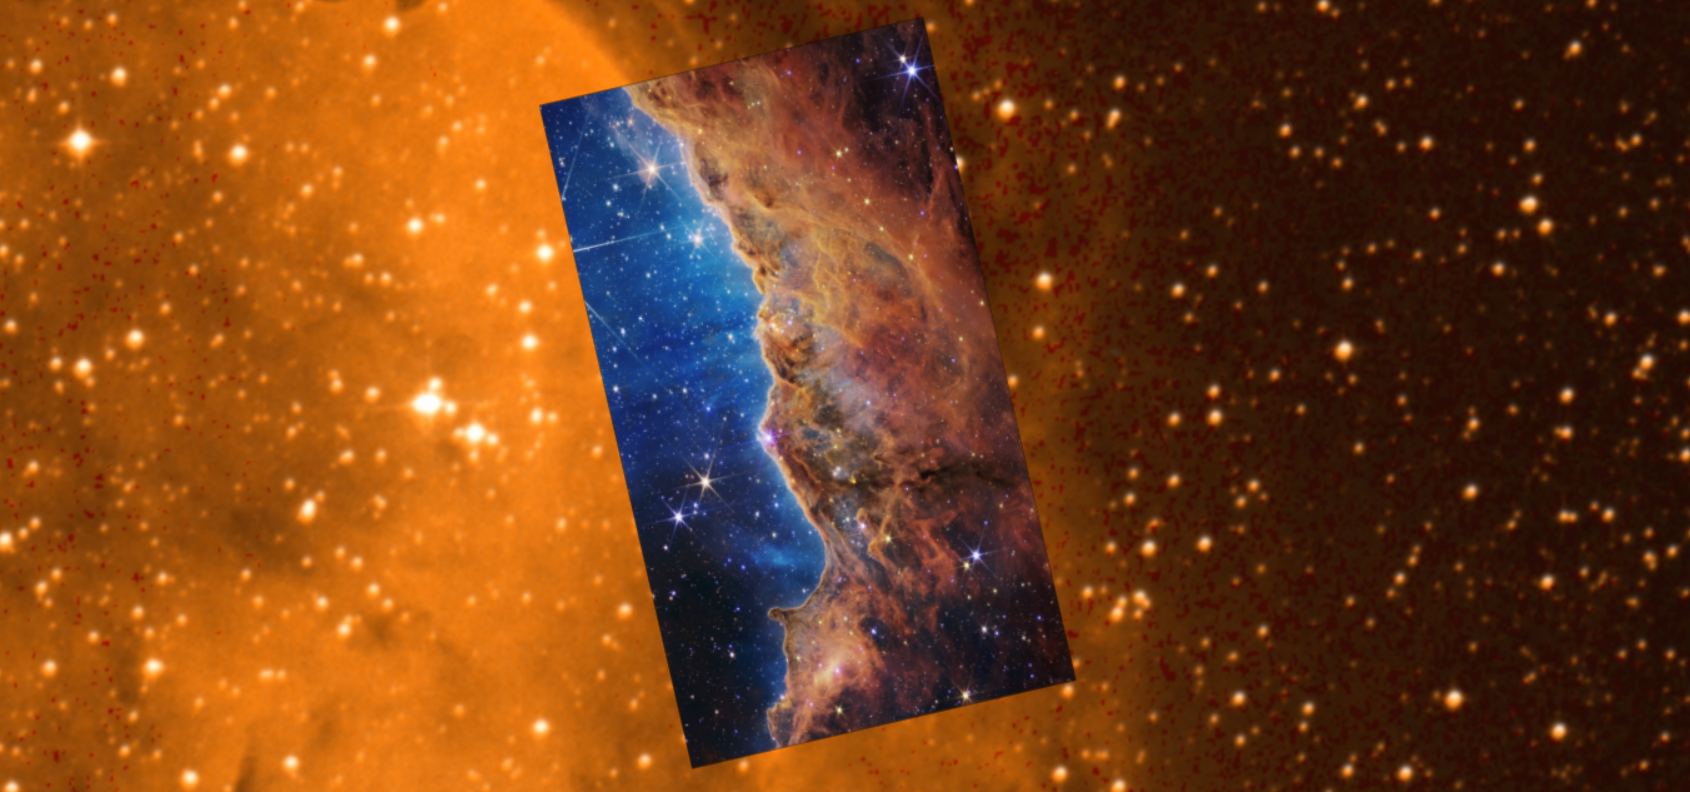 JWST and DSS views of Carina Nebula